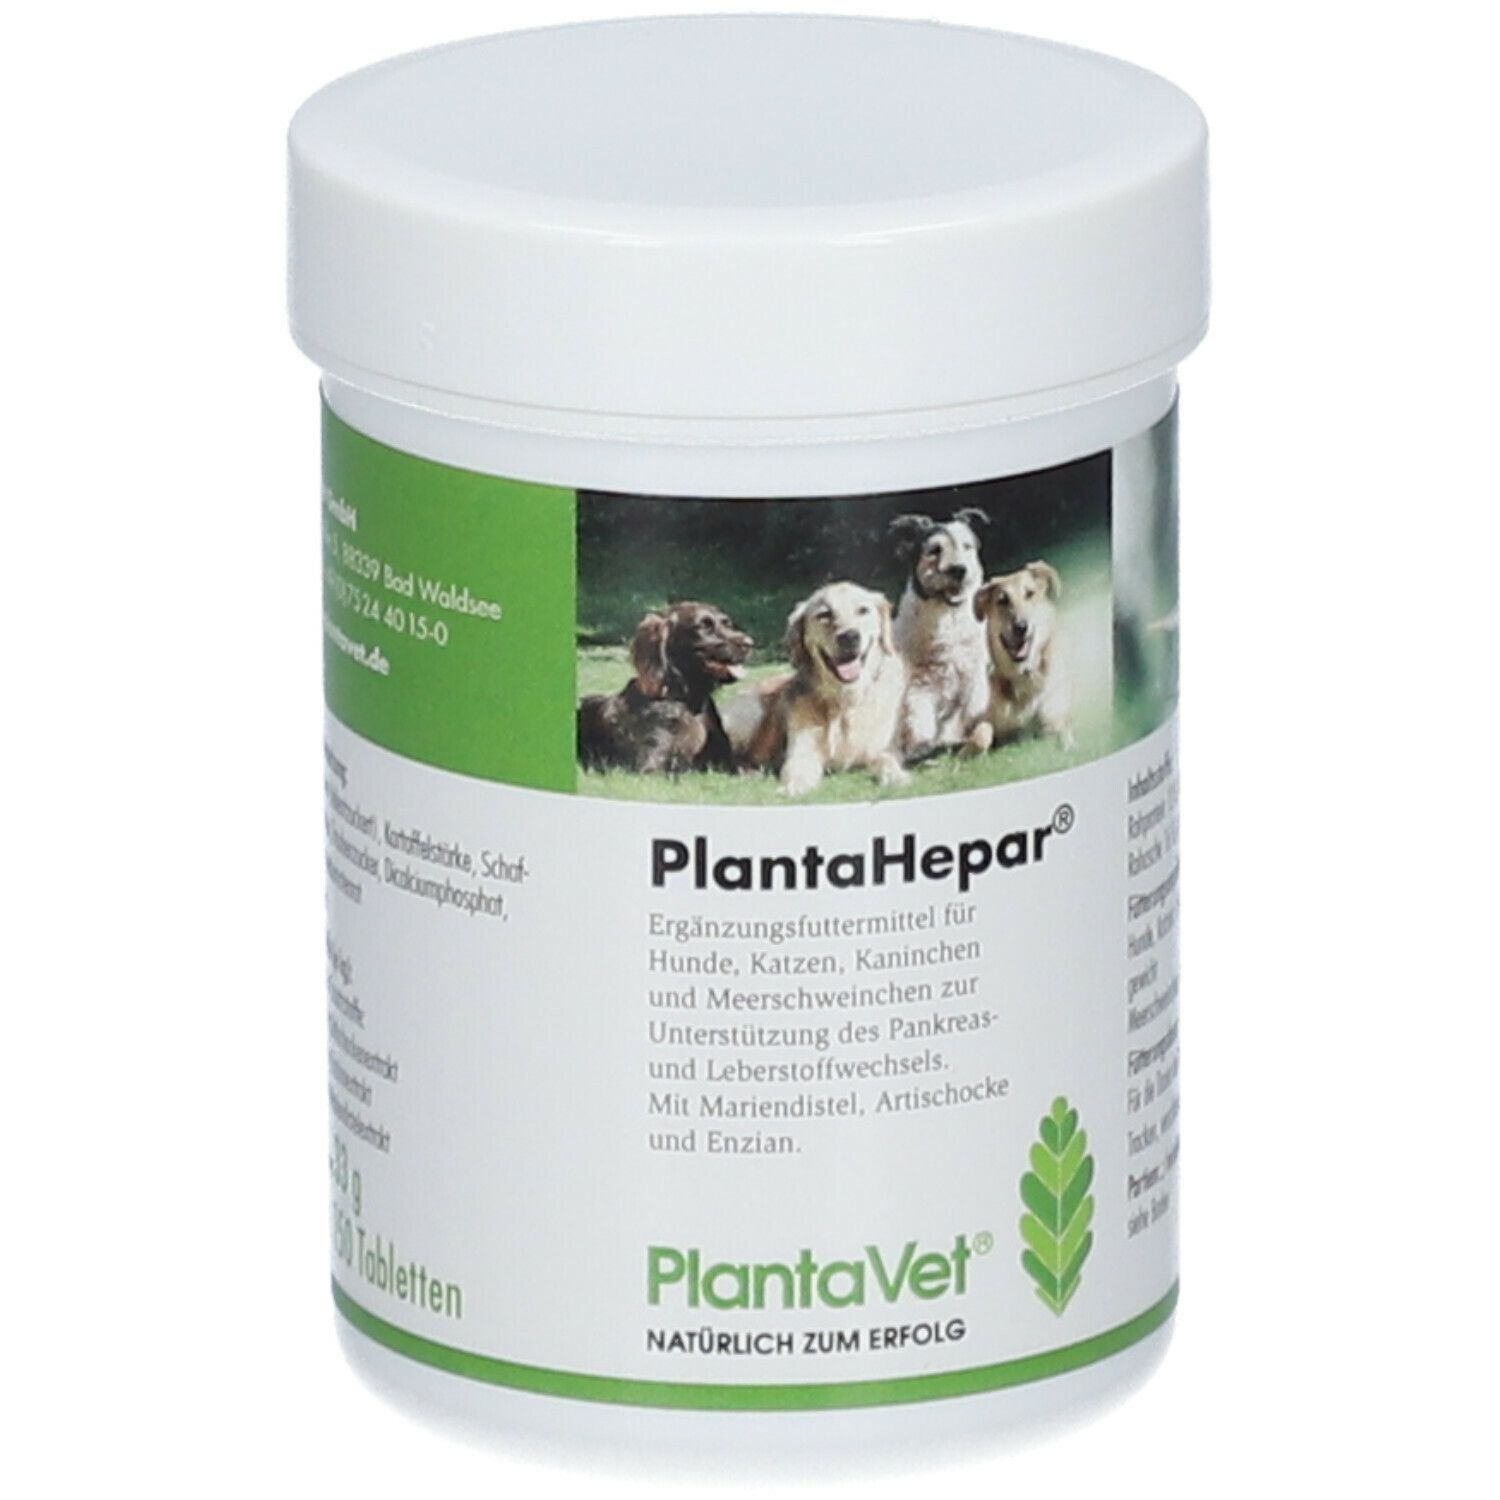 PlantaHepar® - Tabletten